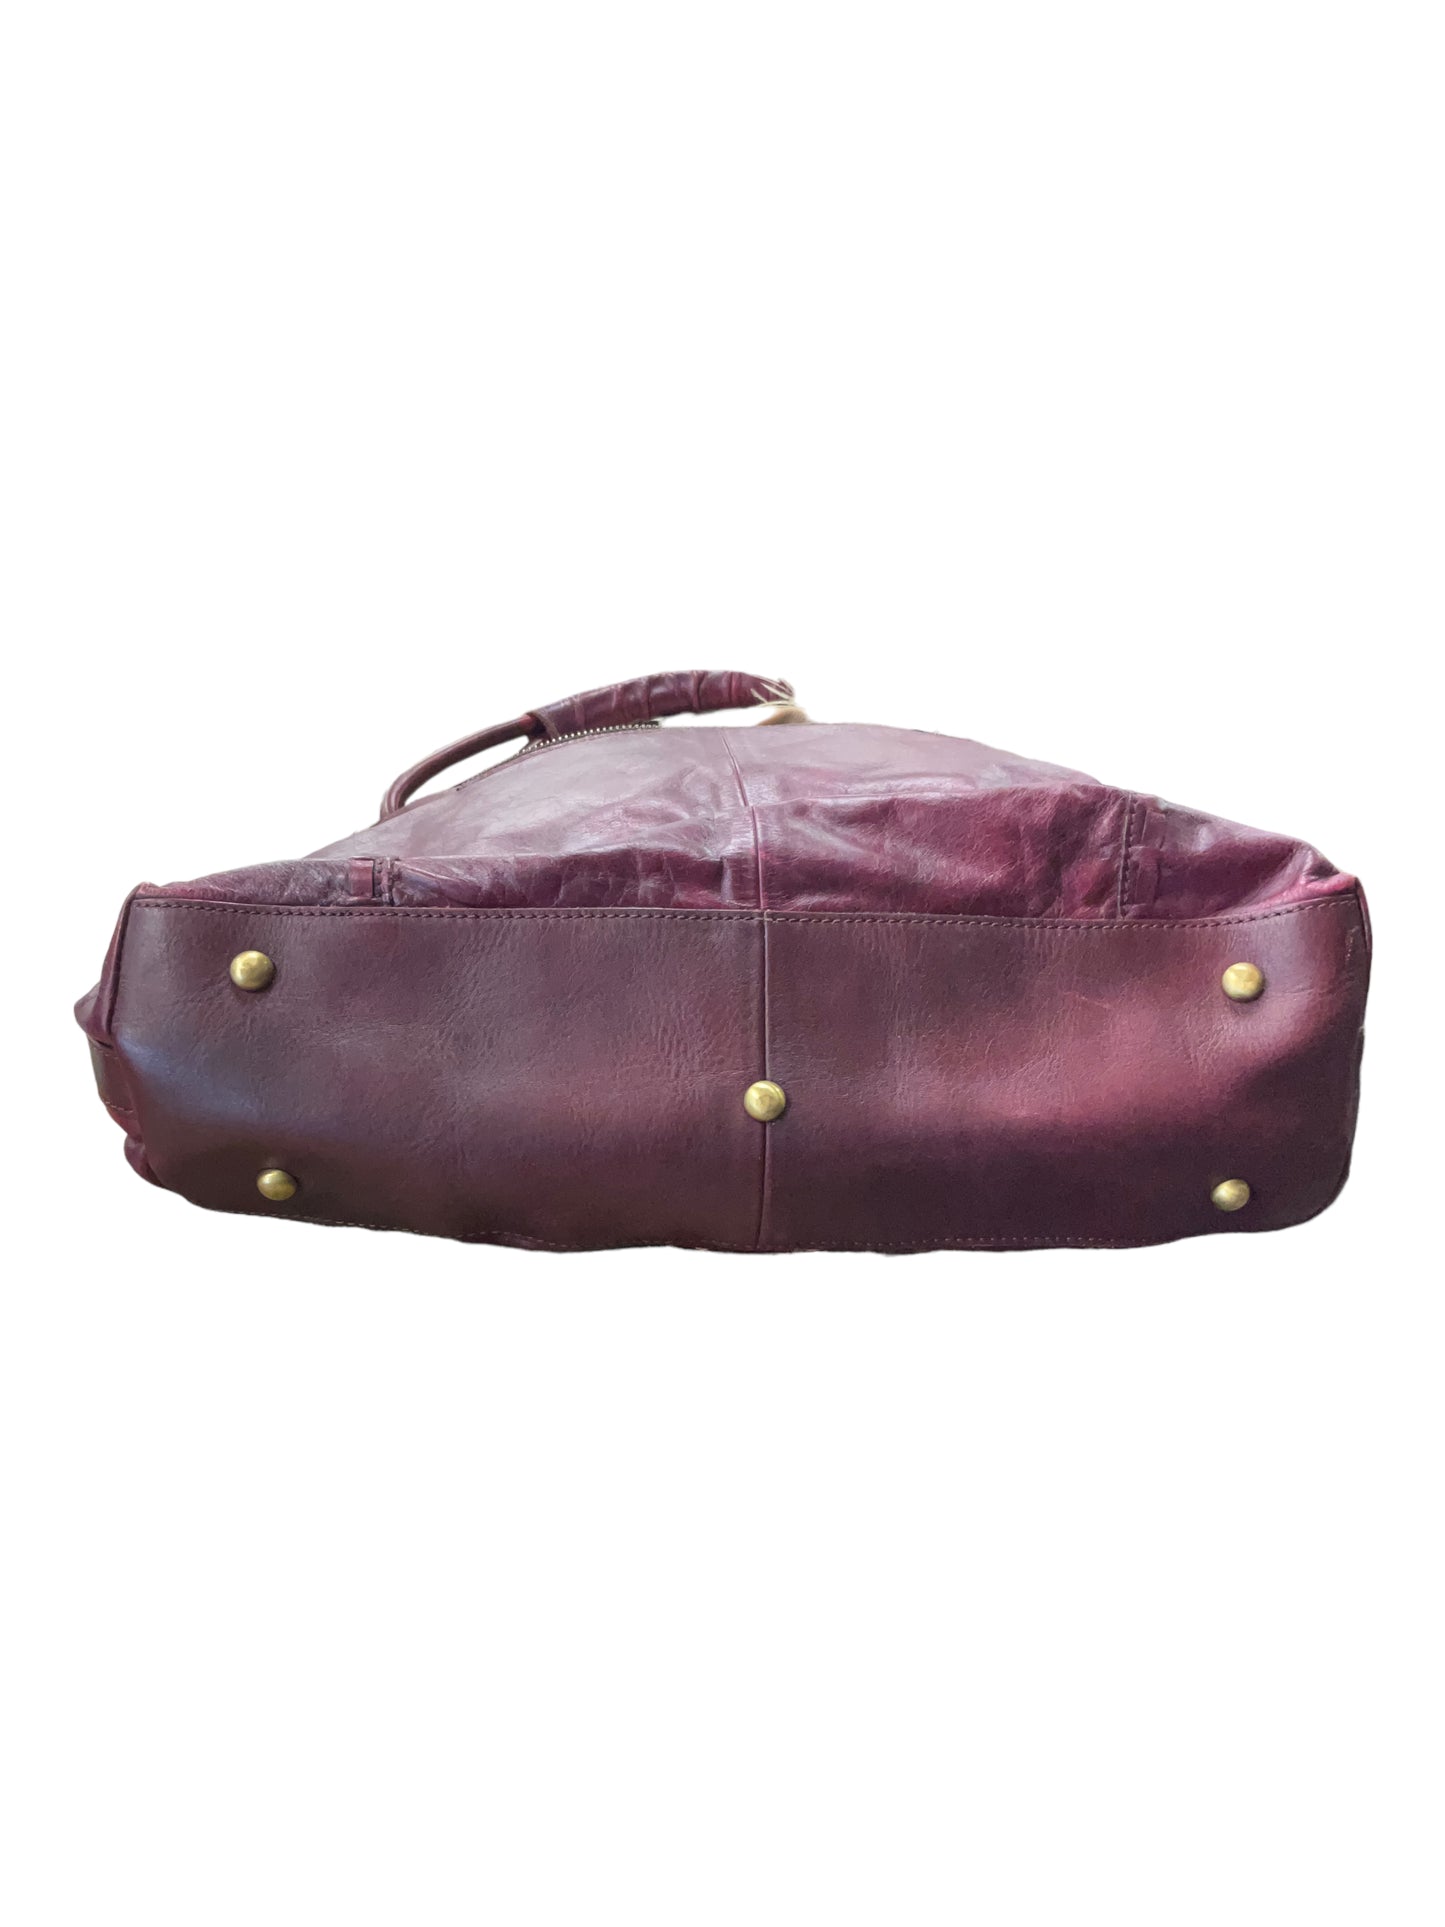 Handbag Leather By Patricia Nash  Size: Large